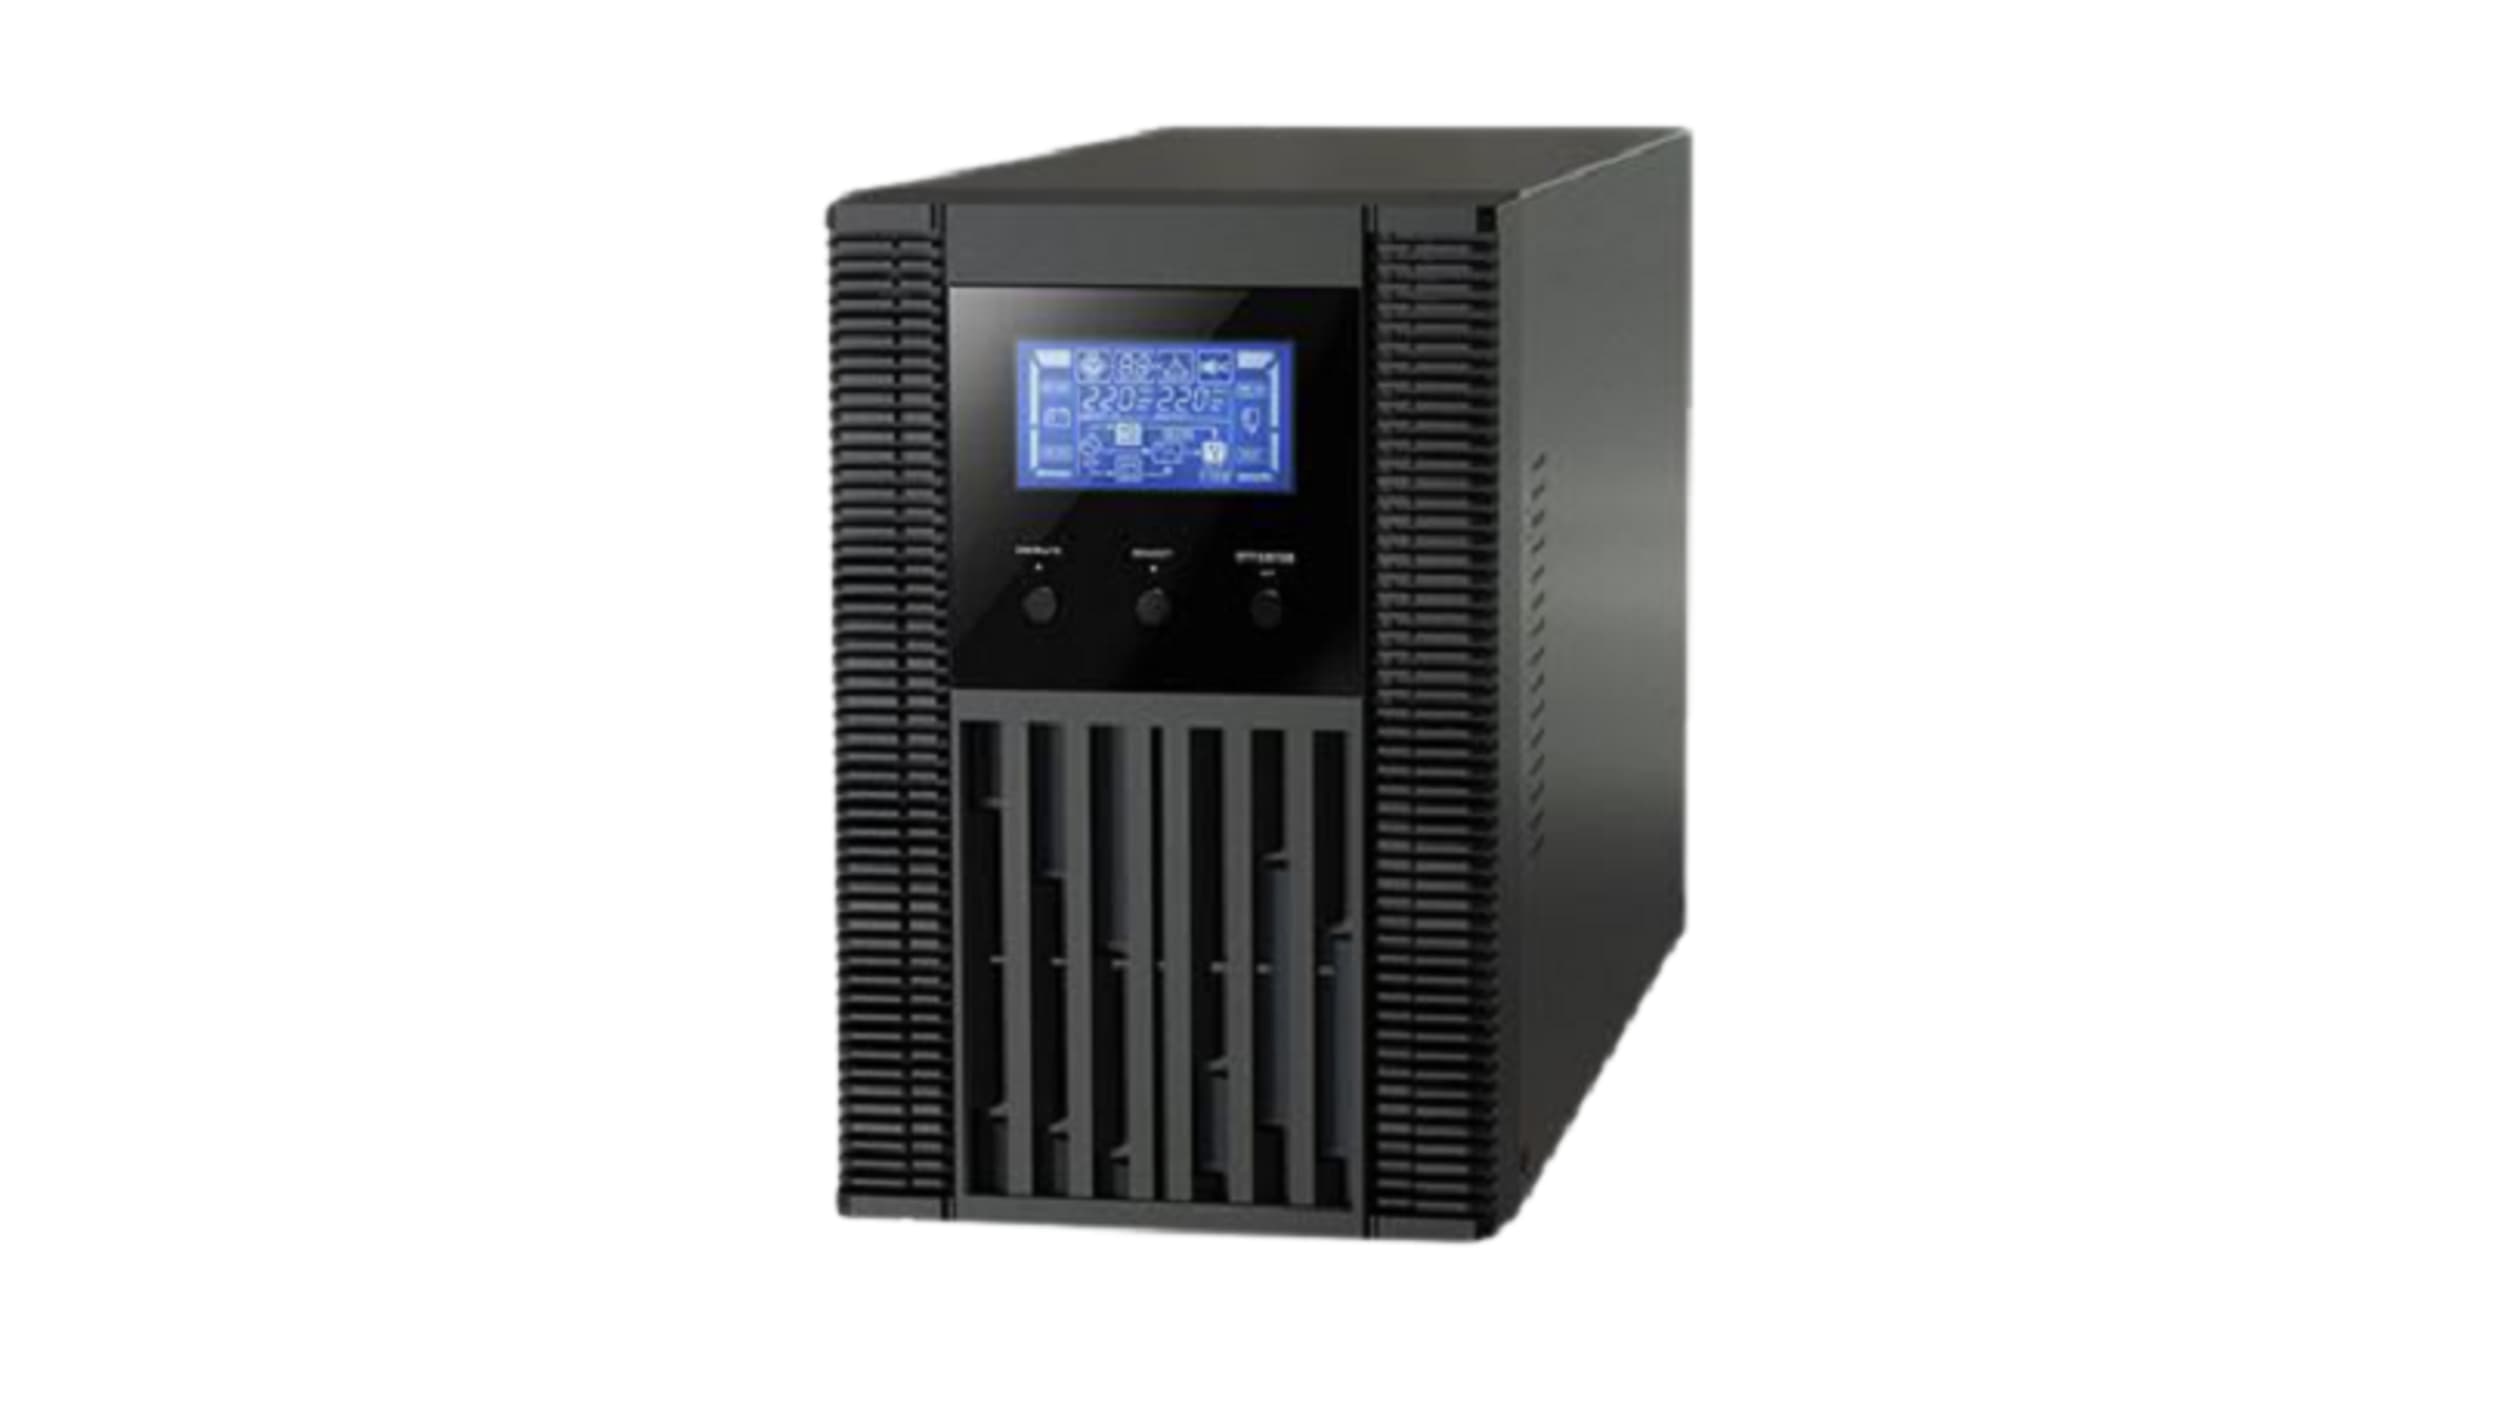 RS PRO 800W PC Power Supply, 200 → 240V ac Input, 3.3, 5, 12, -12V Output